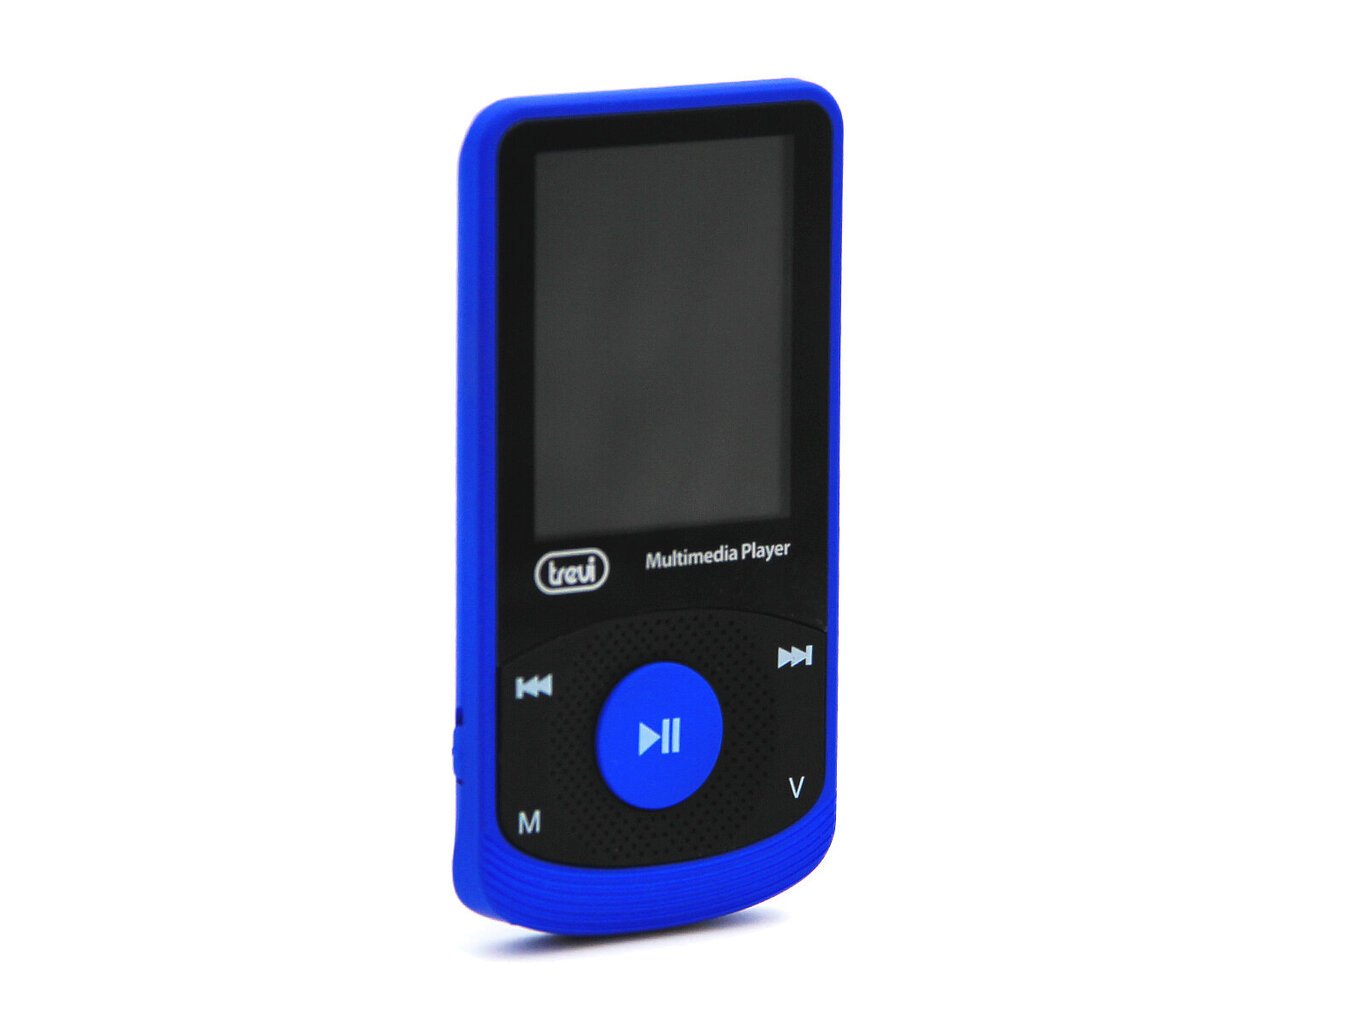 Odtwarzacz MP3 Trevi Odtwarzacz MP3 Trevi MPV 1725 SD blue kaina ir informacija | MP3 grotuvai | pigu.lt